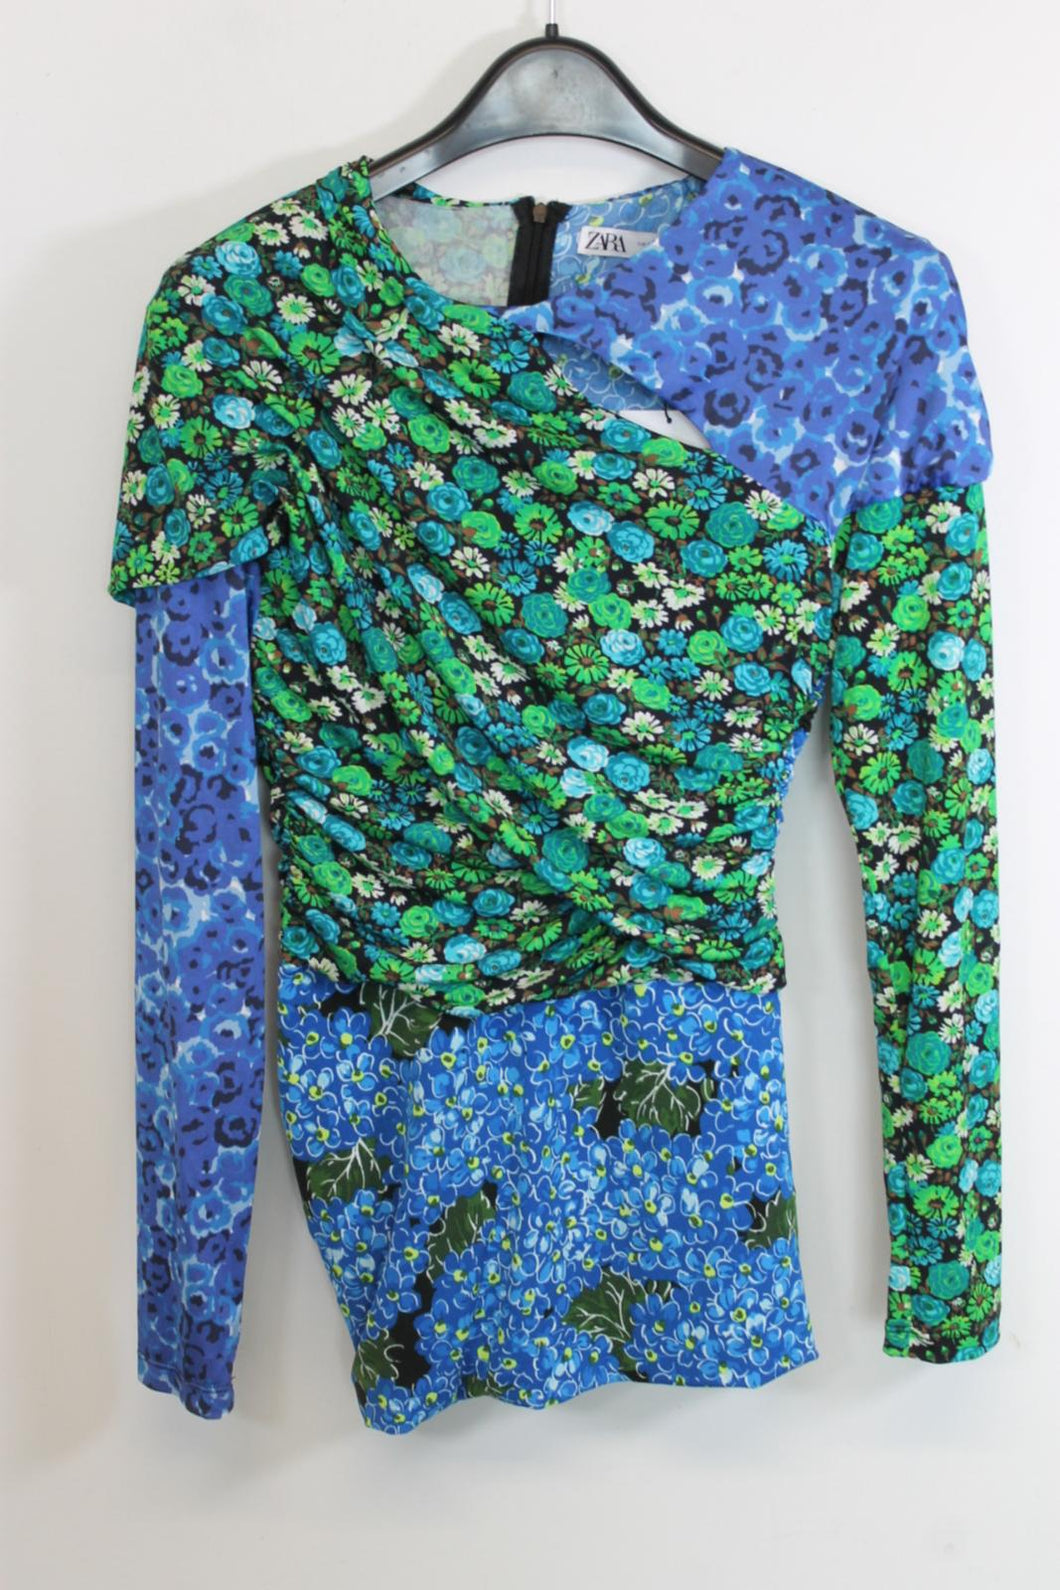 ZARA Ladies Multicoloured Long Sleeve Round Neck Drapey Blouse Top Size M BNWT